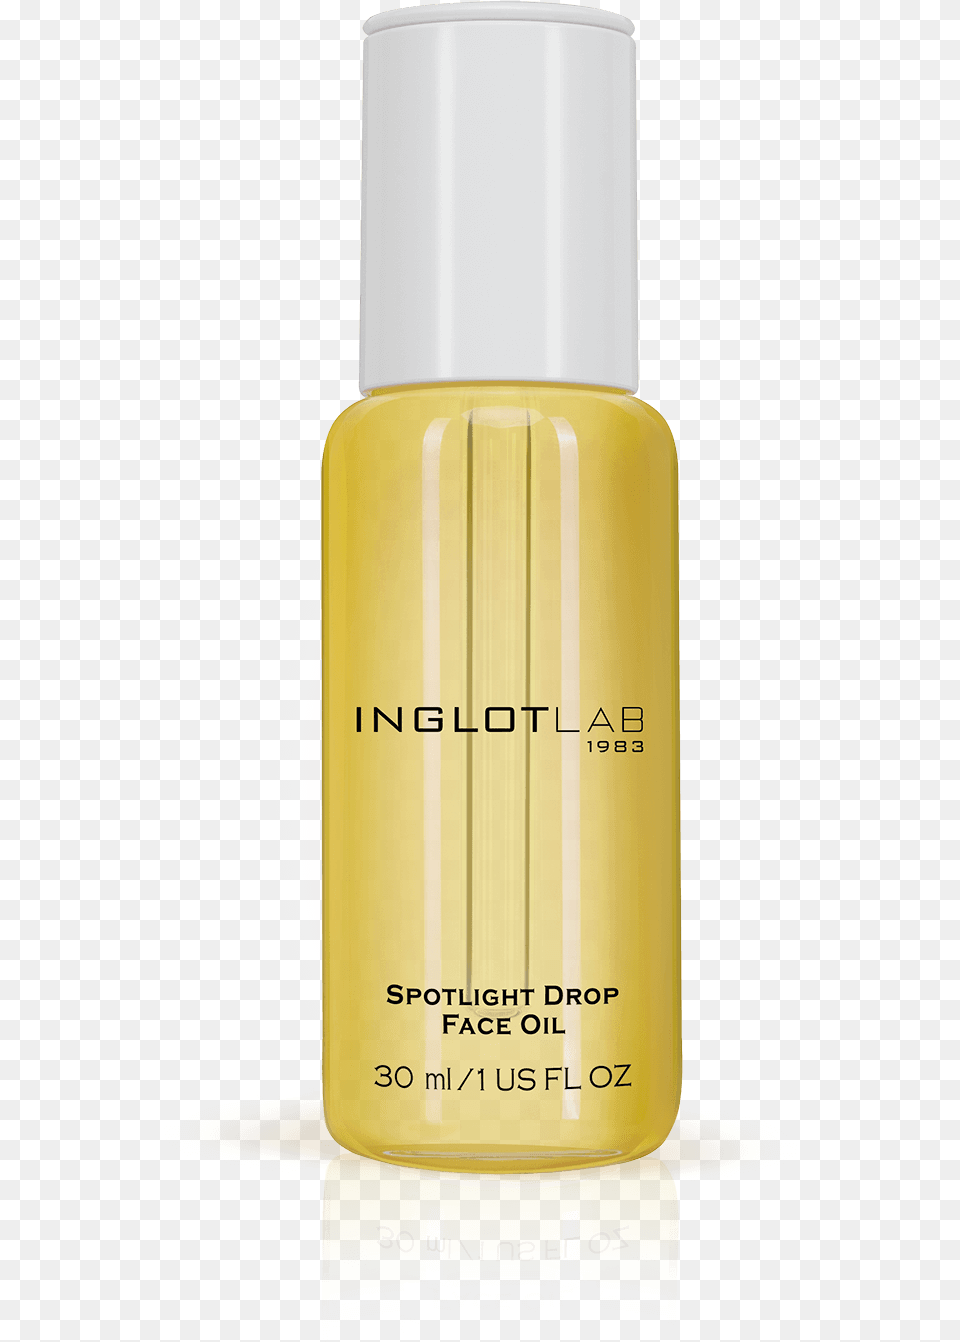 Hd Yellow Spotlight Dream Drop Face Oil Nail Polish, Bottle, Cosmetics, Perfume Free Png Download